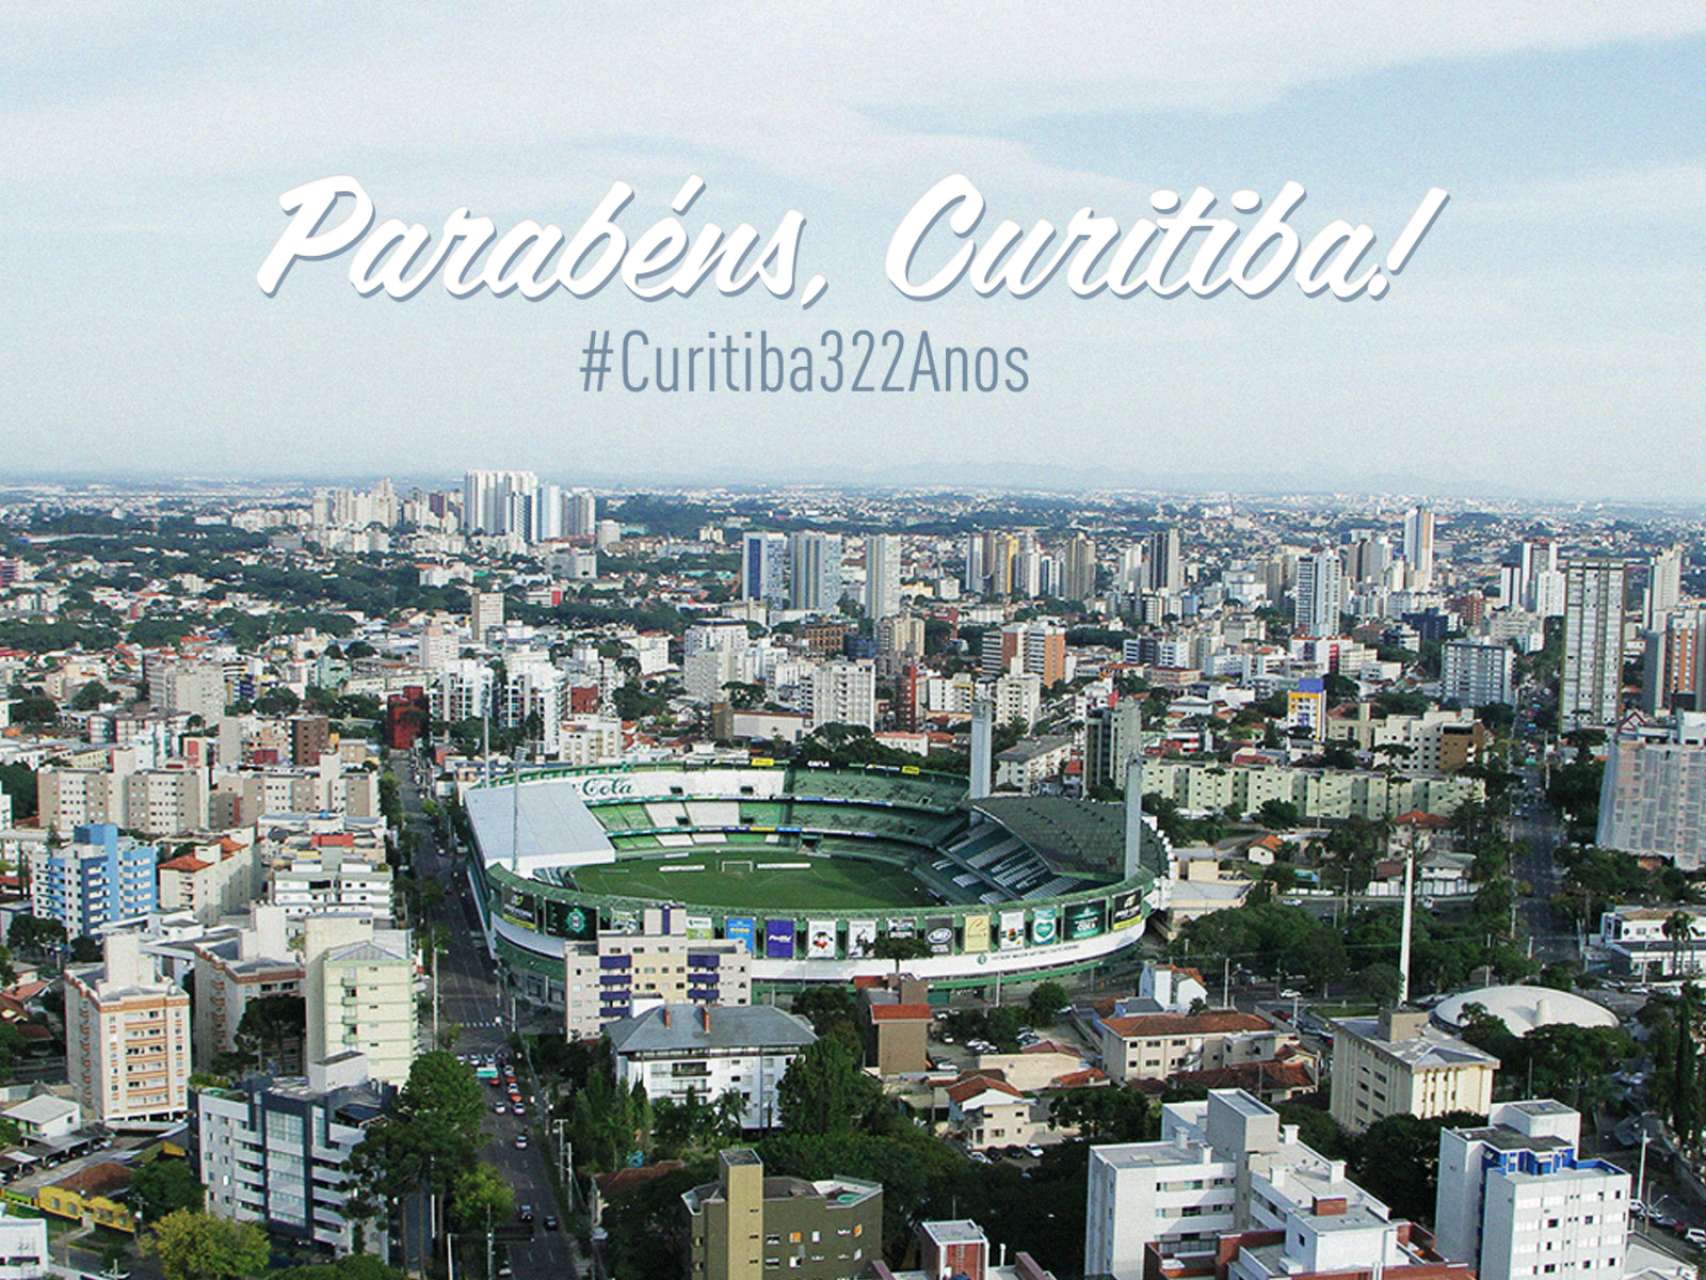 Parabns, Curitiba!